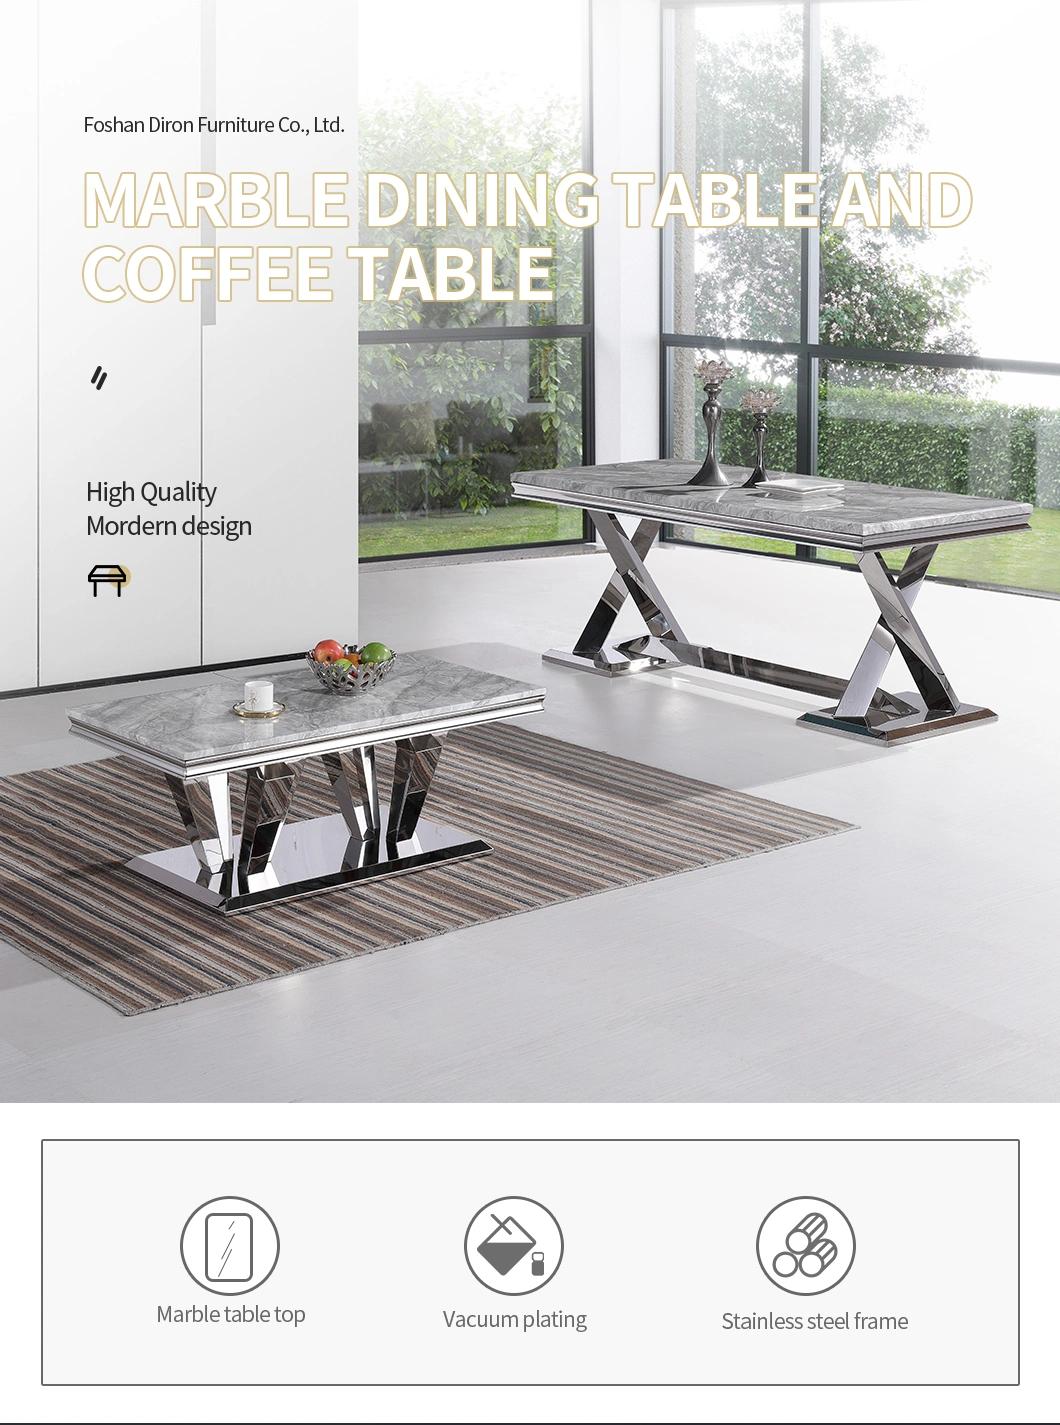 Modern Stainless Steel Diron Carton Box 130*70*46cm China Sofa Table Chinese Furniture